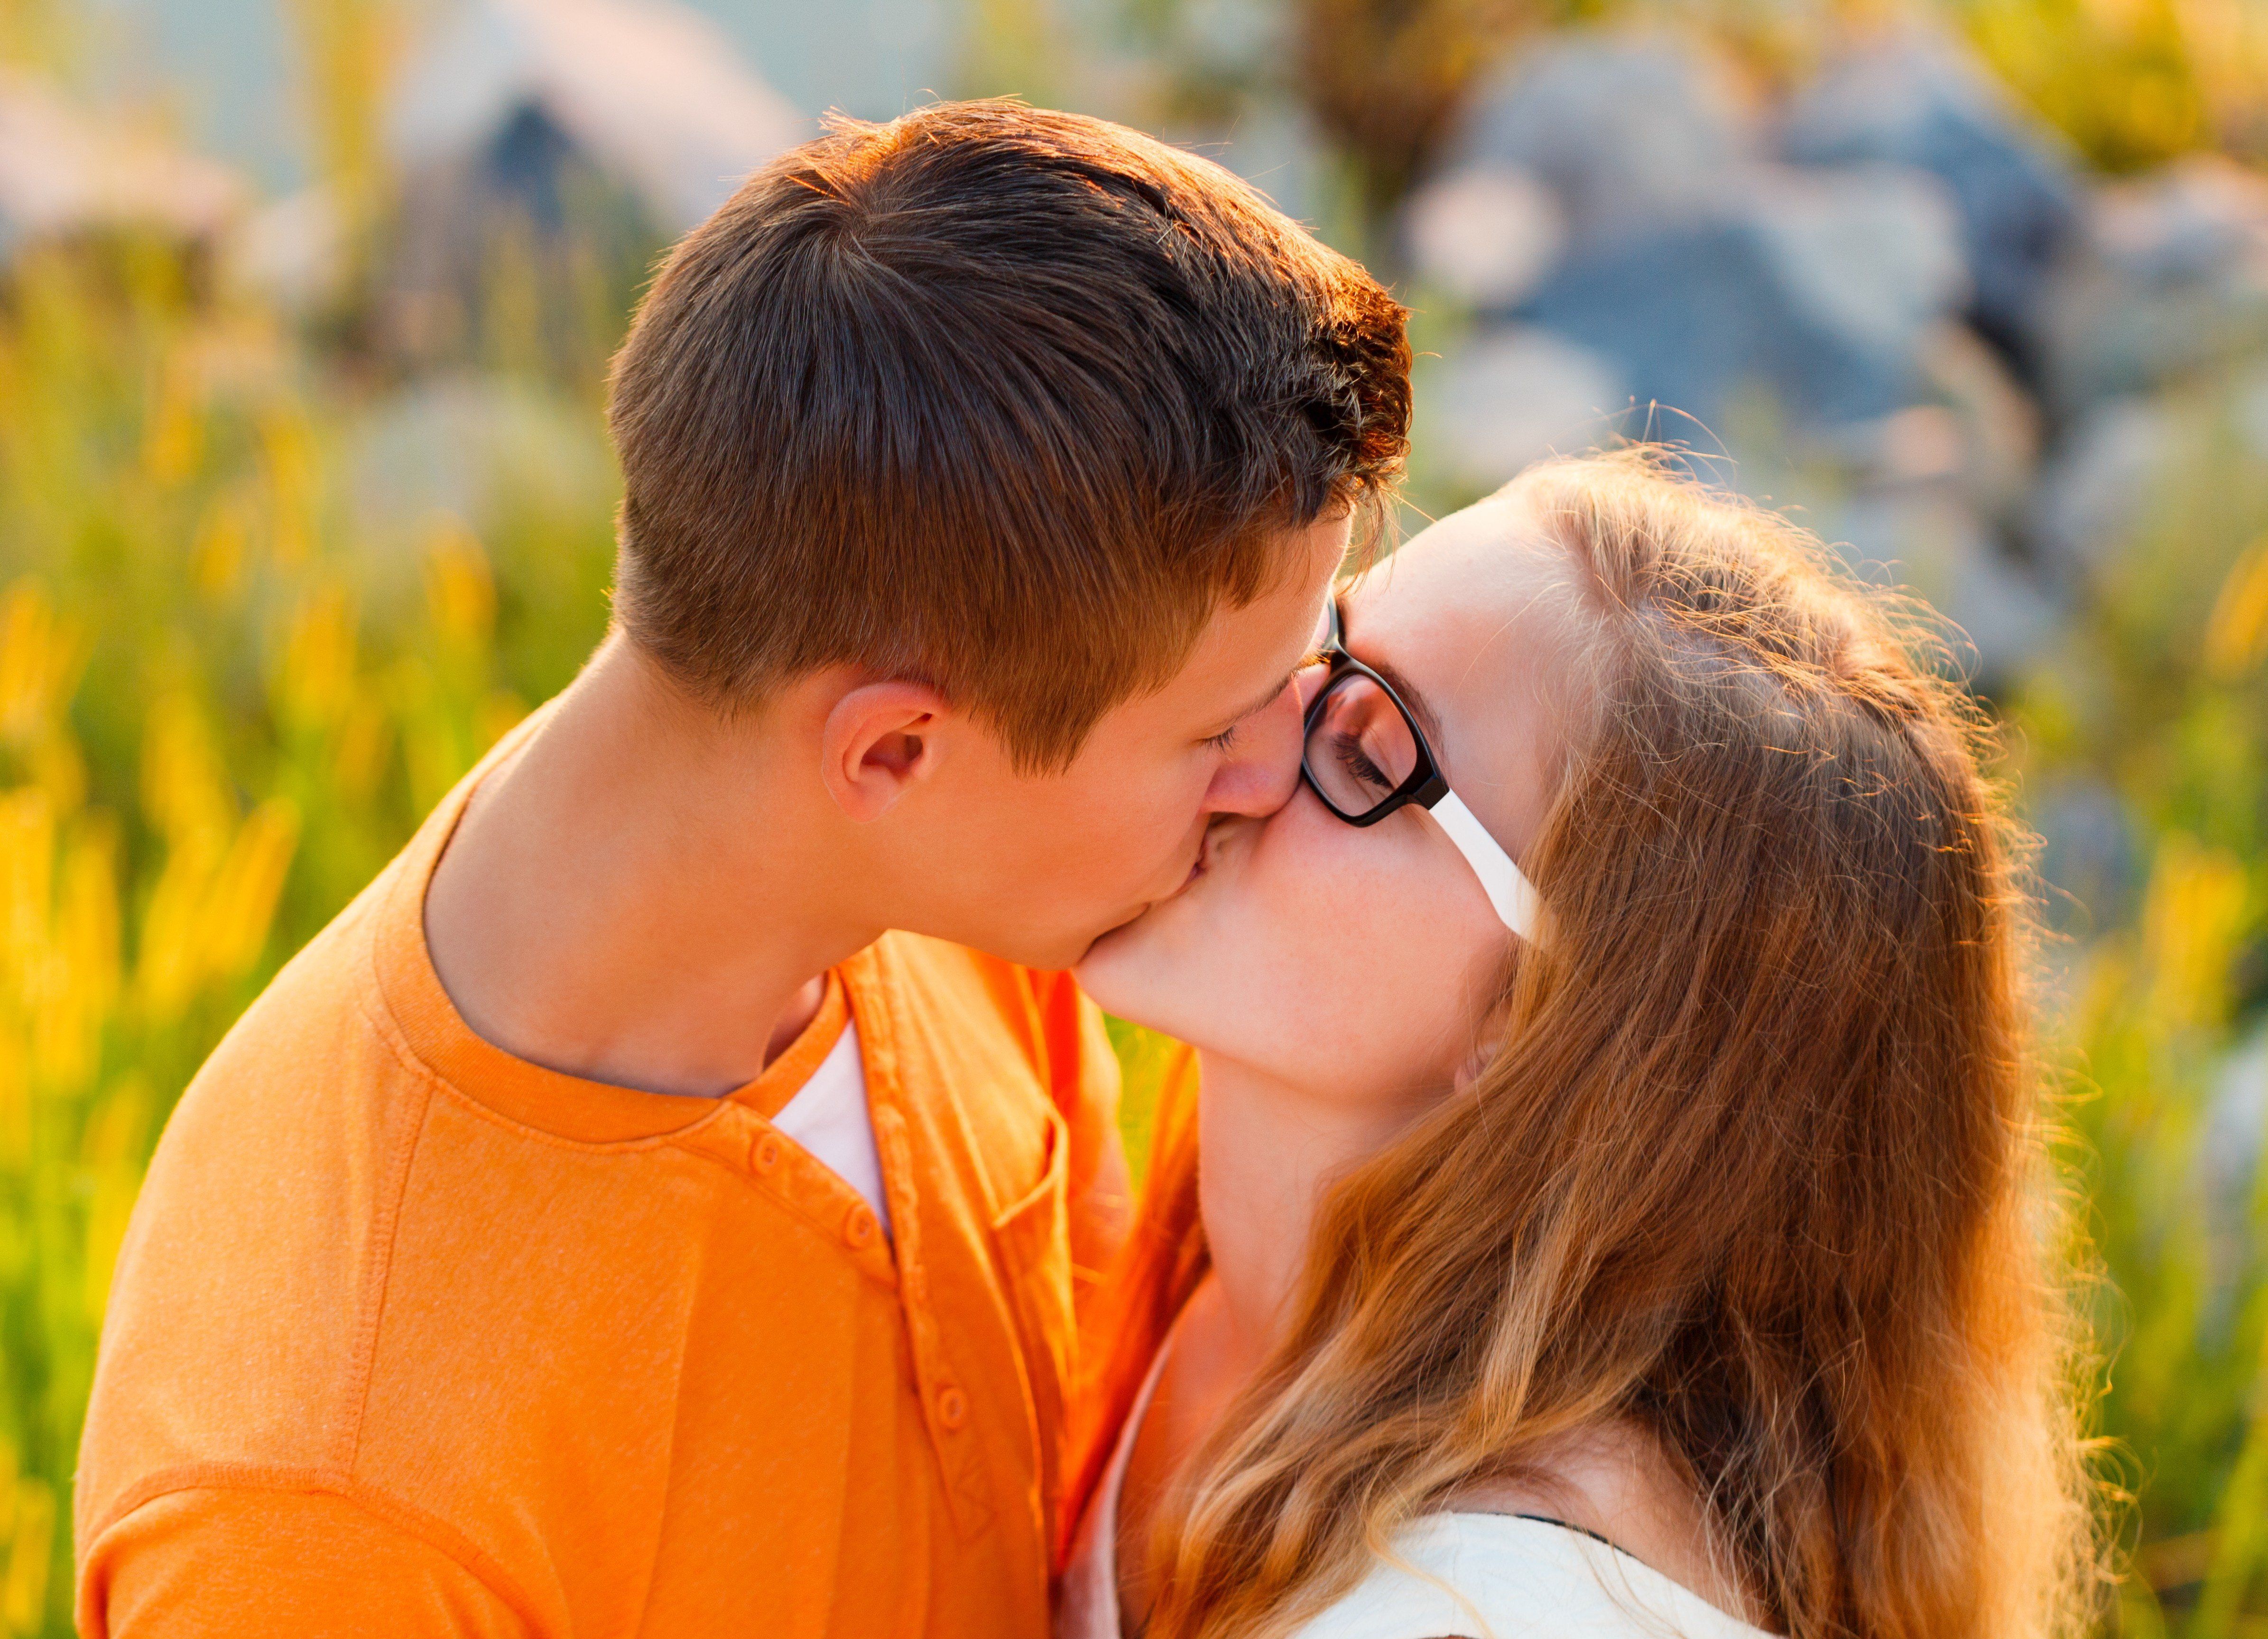 best of Kissing sex Romantic teen